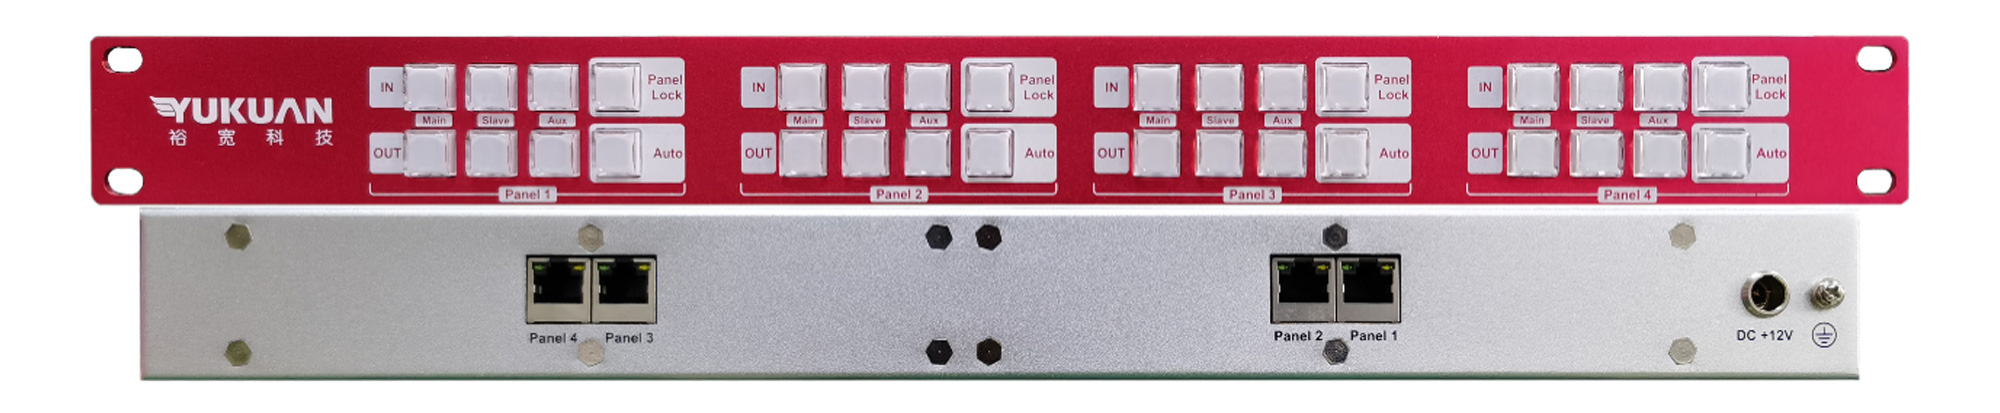 YUK5301Remote-control-panel(optional)